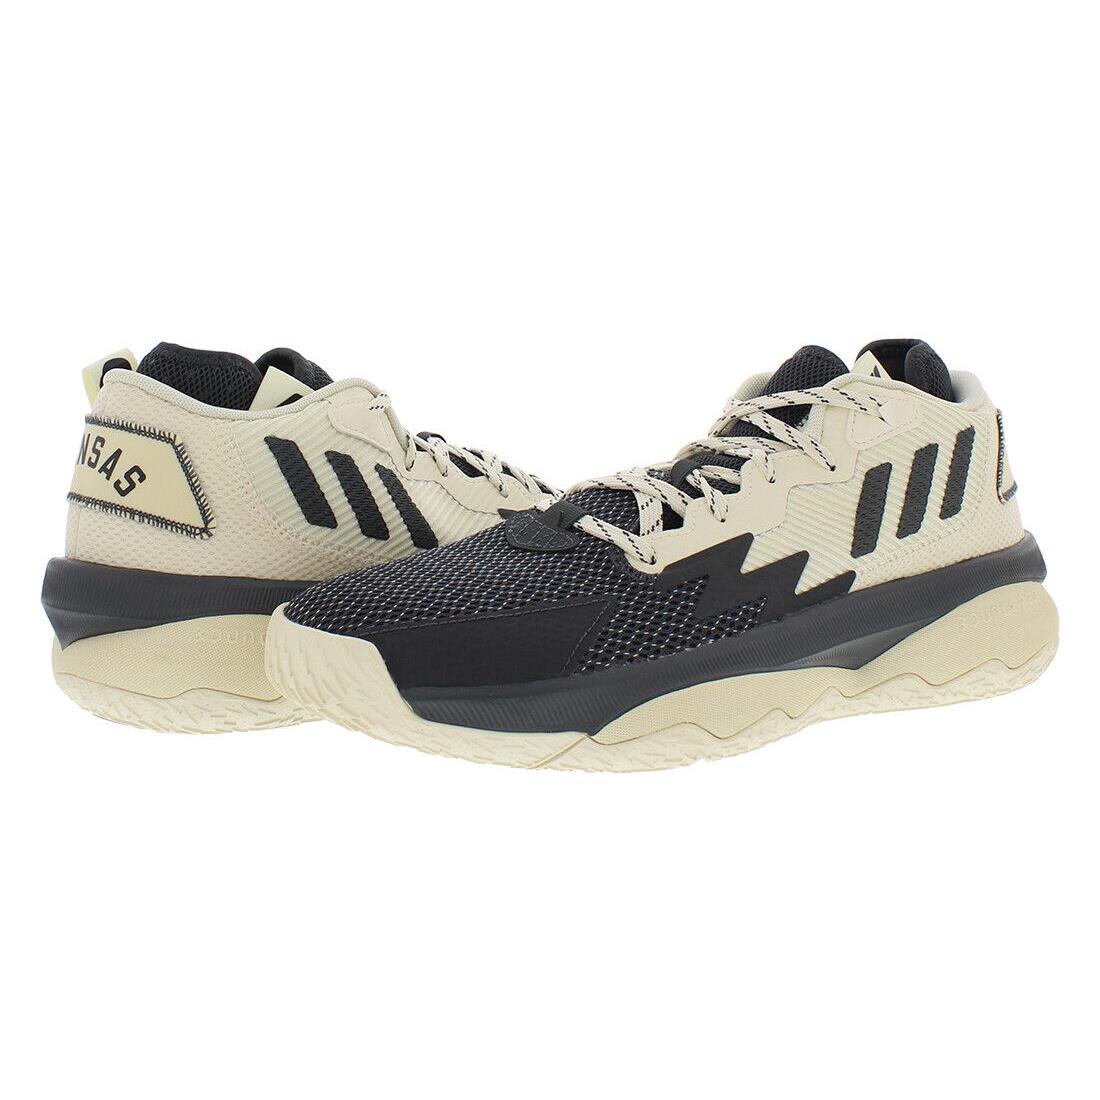 Adidas Sm Dame 8 Unisex Shoes - Cream/Grey, Main: Off-White